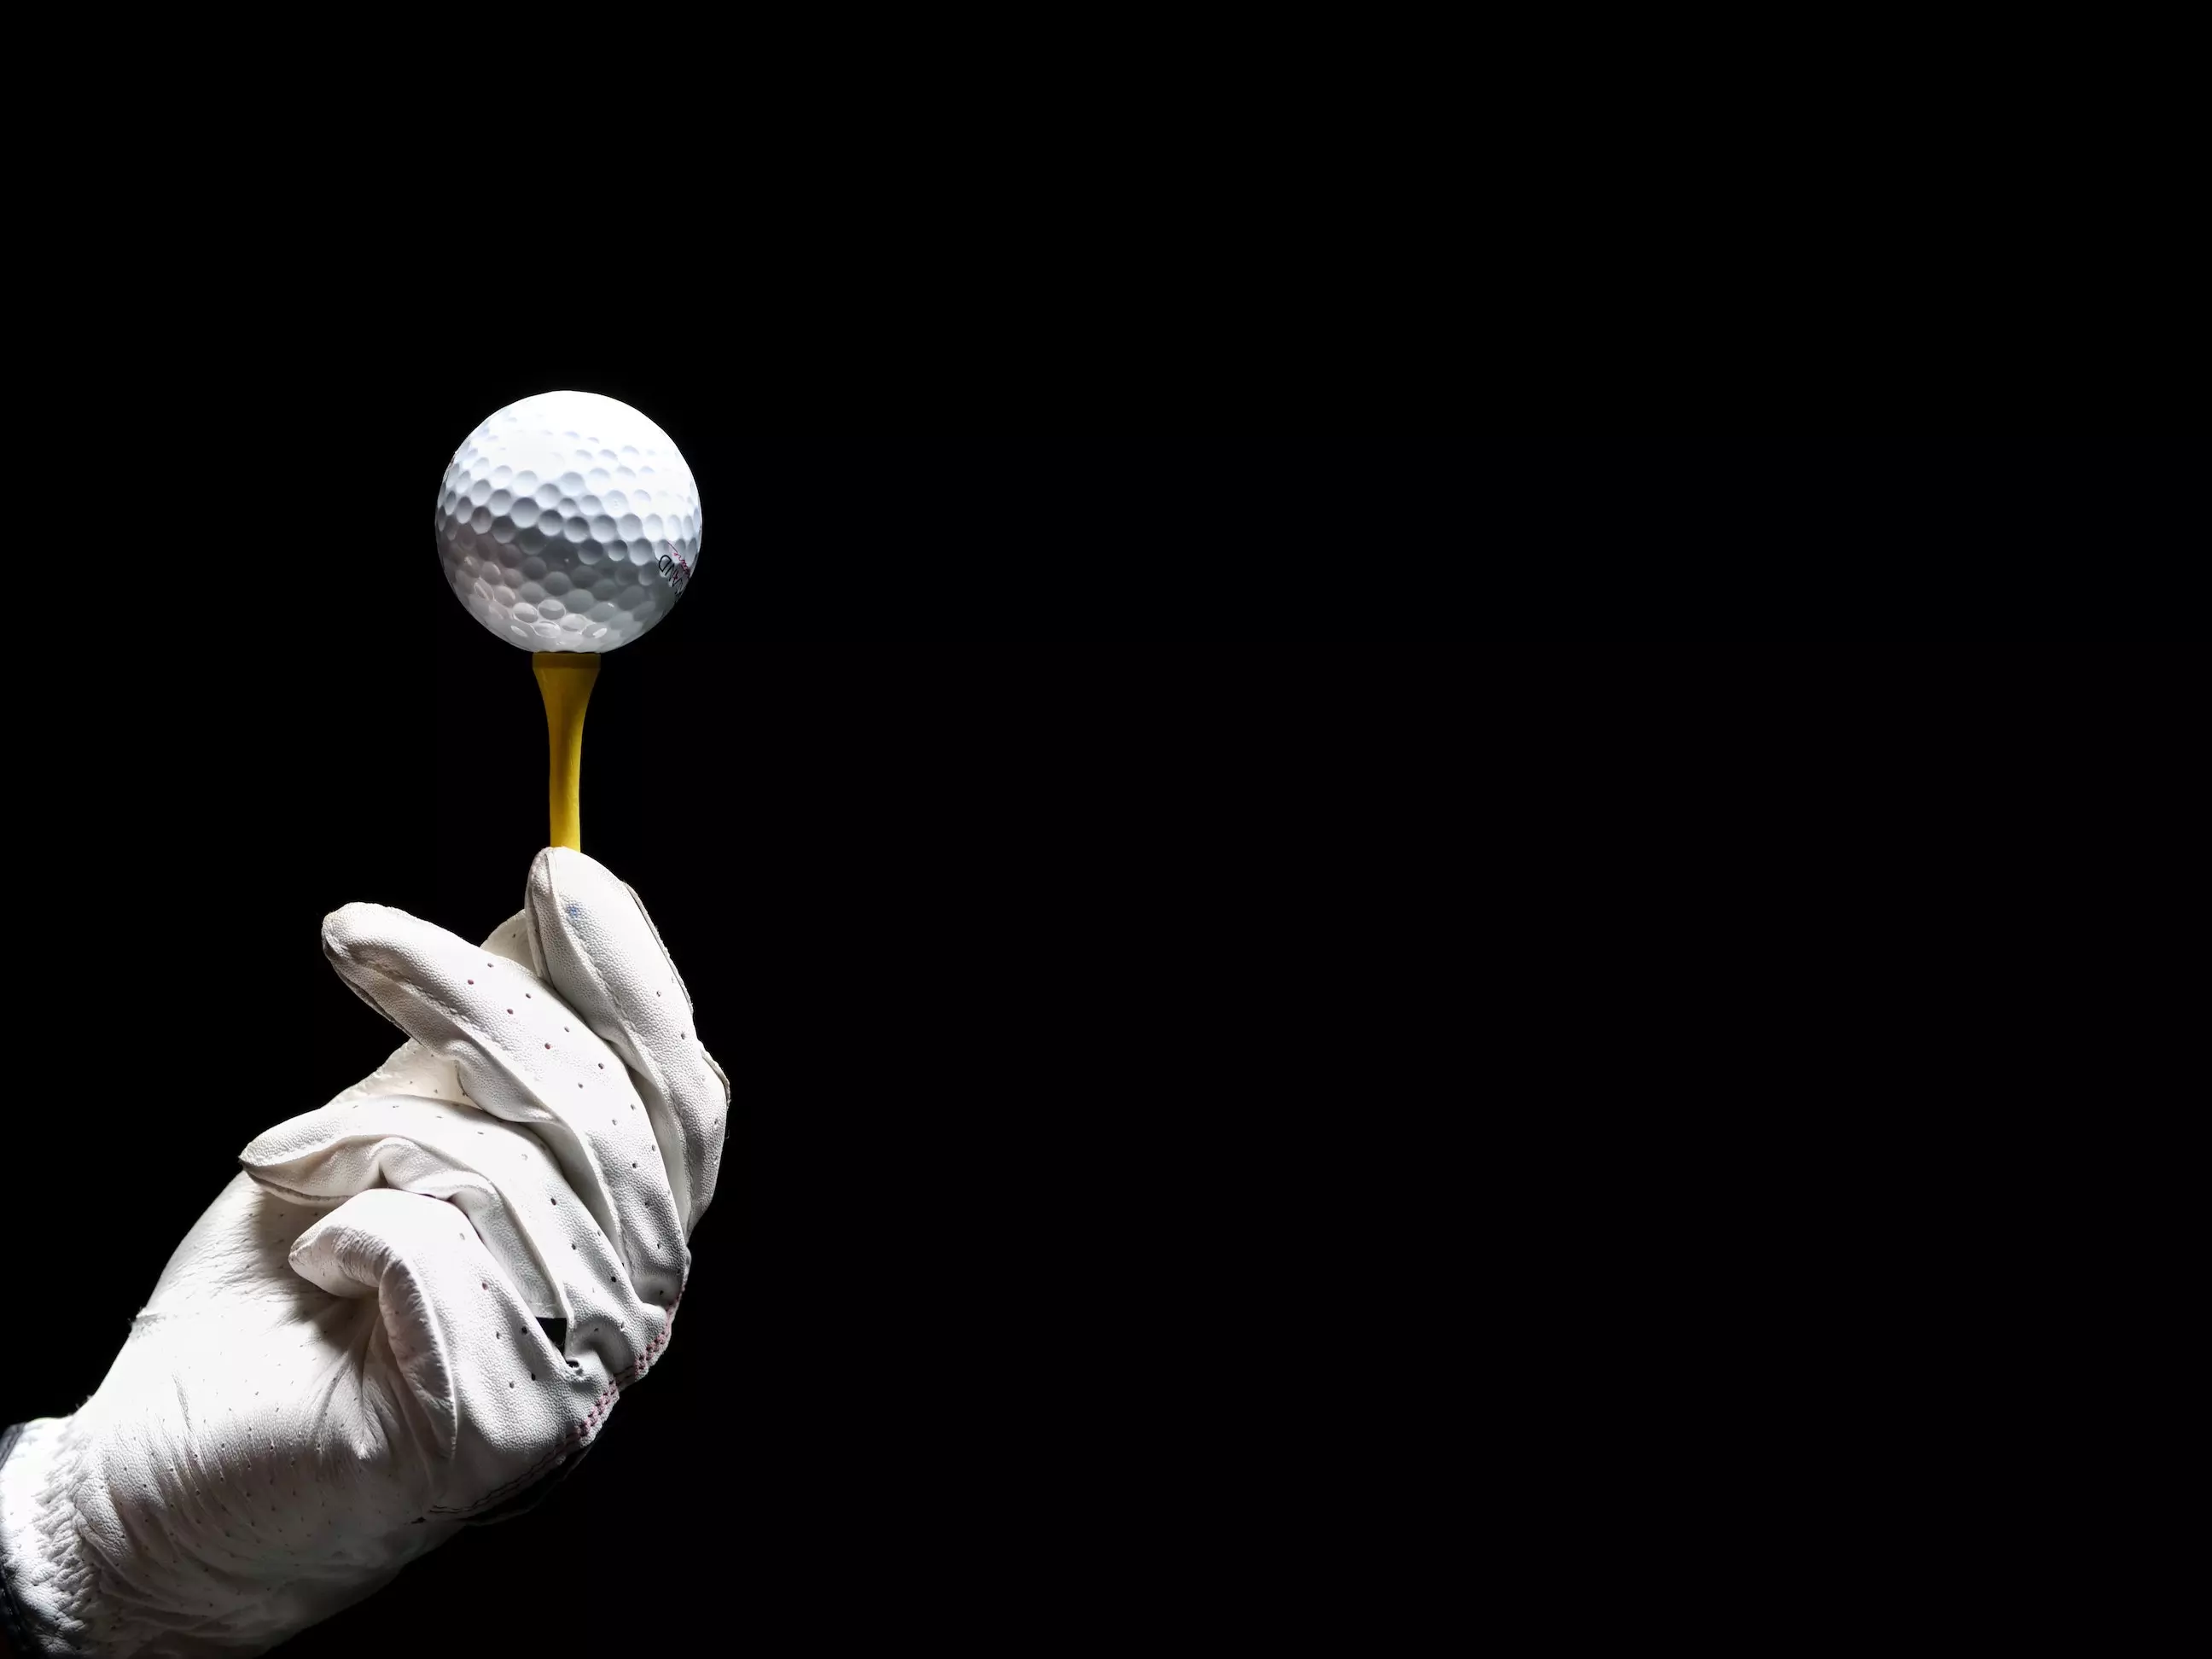 How High Should You Tee A Golf Ball?